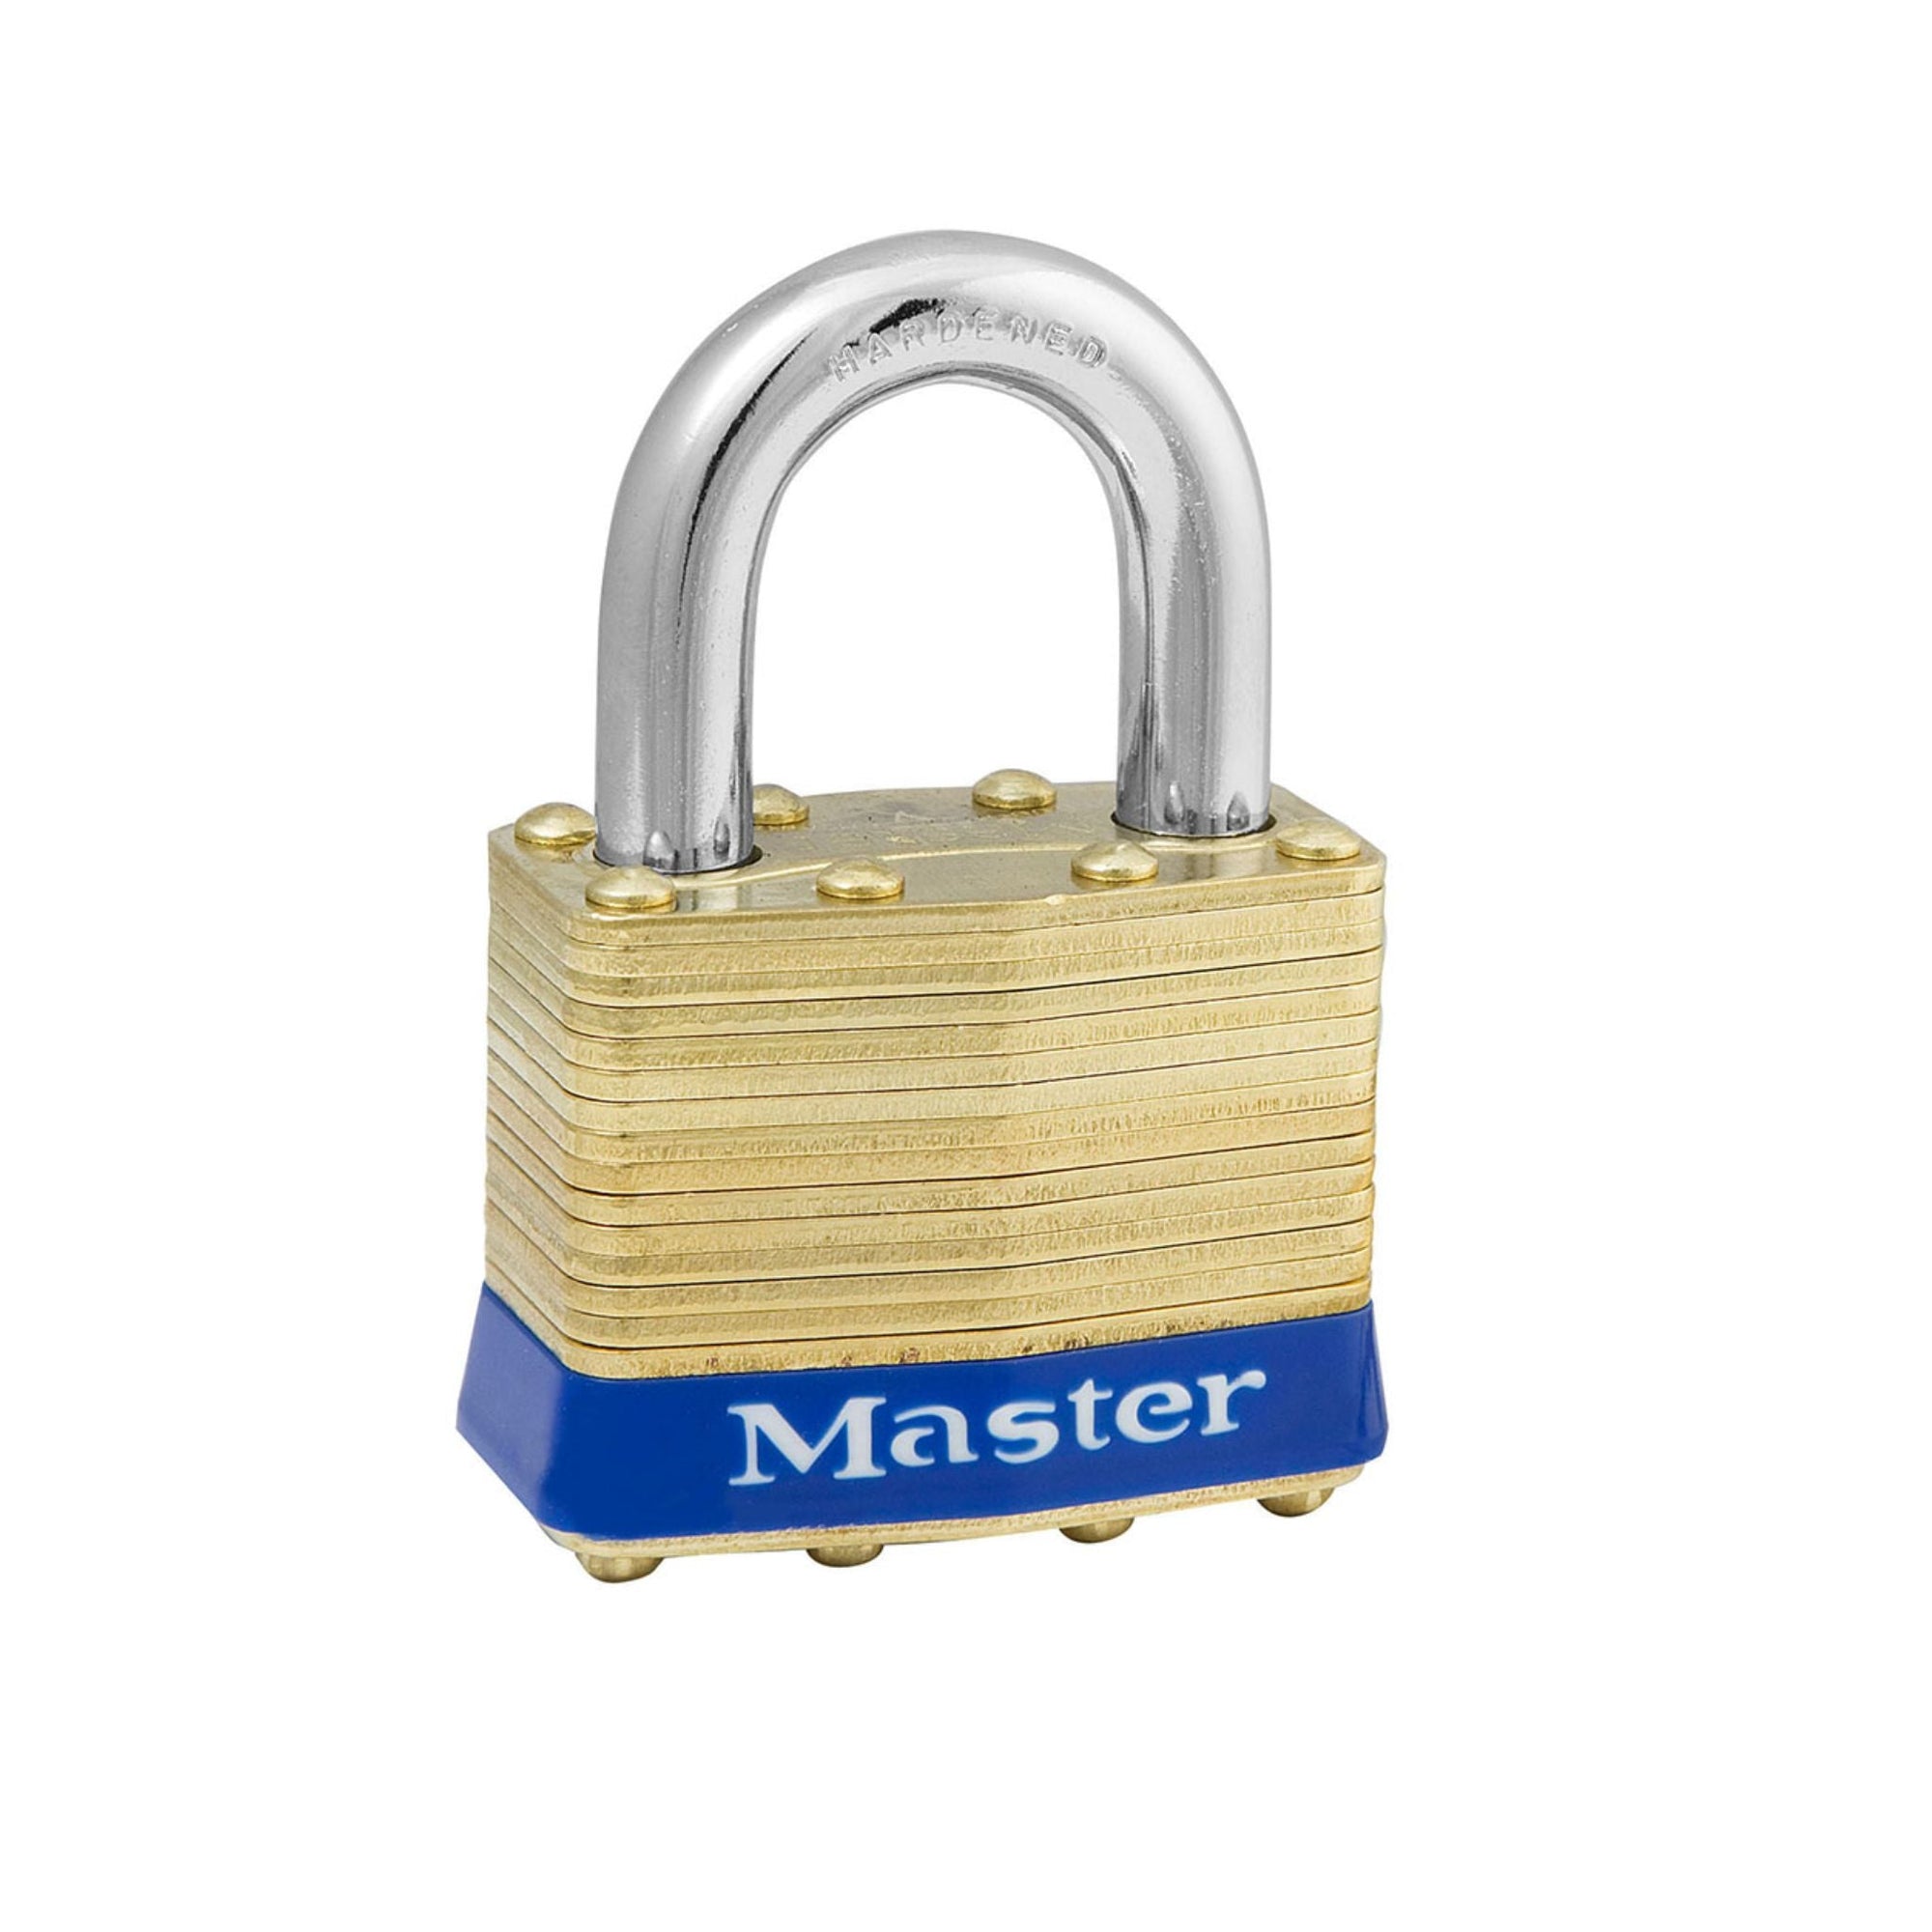 Master Lock 2KA 0312 Lock Laminated brass No. 2 Series Padlock Keyed to Match Existing Key Number KA0312 - The Lock Source